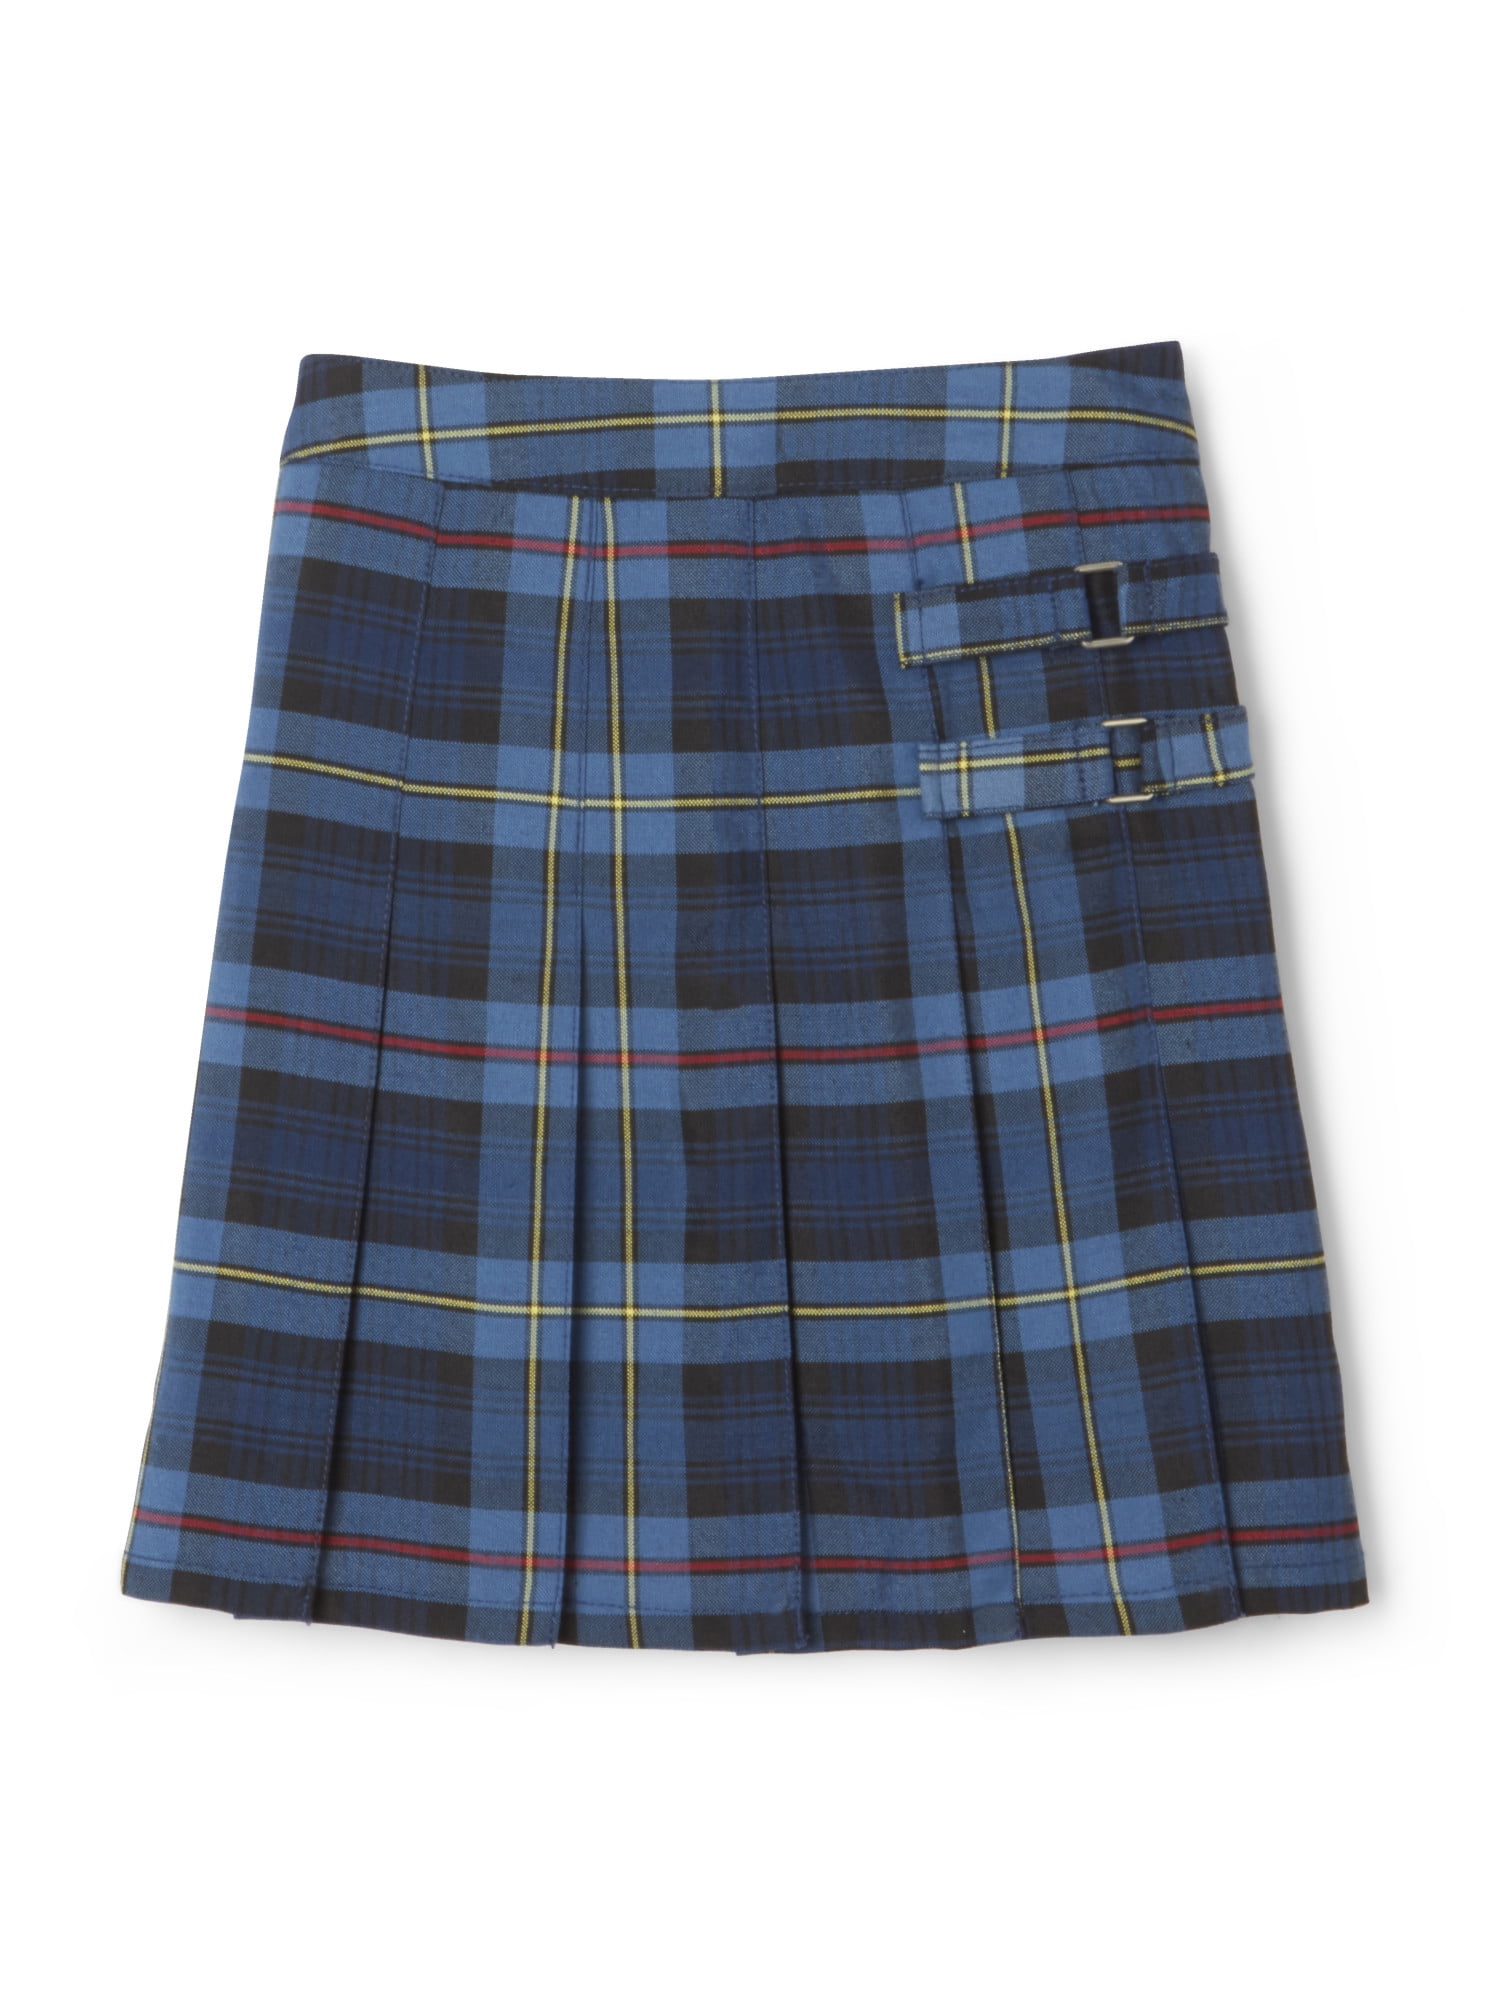 U.S Two-Tab Pleated Khaki Scooter Skirt Girls' School Uniform Polo Assn 2 Pack 